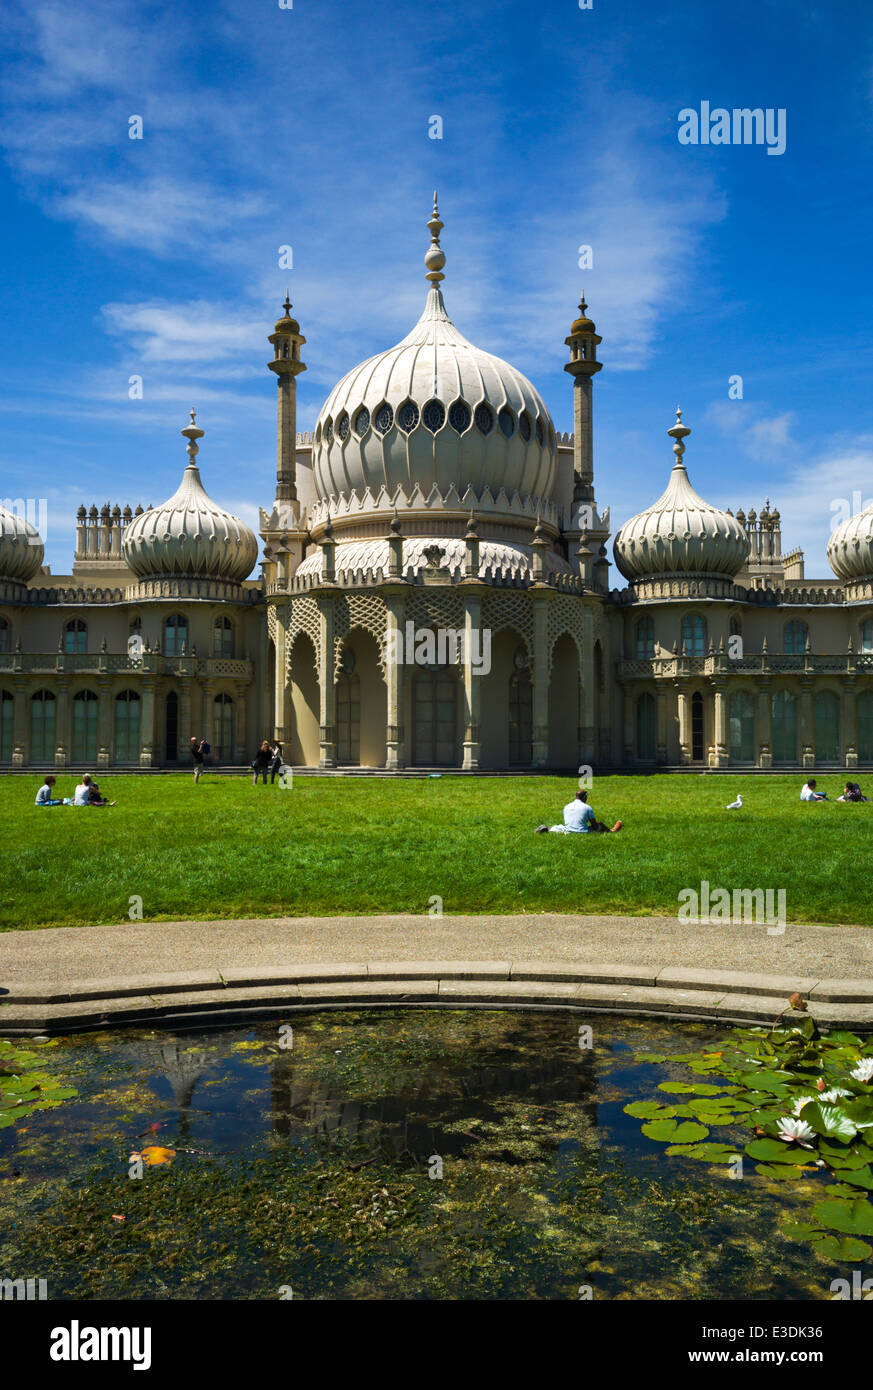 Royal Pavilion, Brighton, East Sussex, England, UK Stockfoto